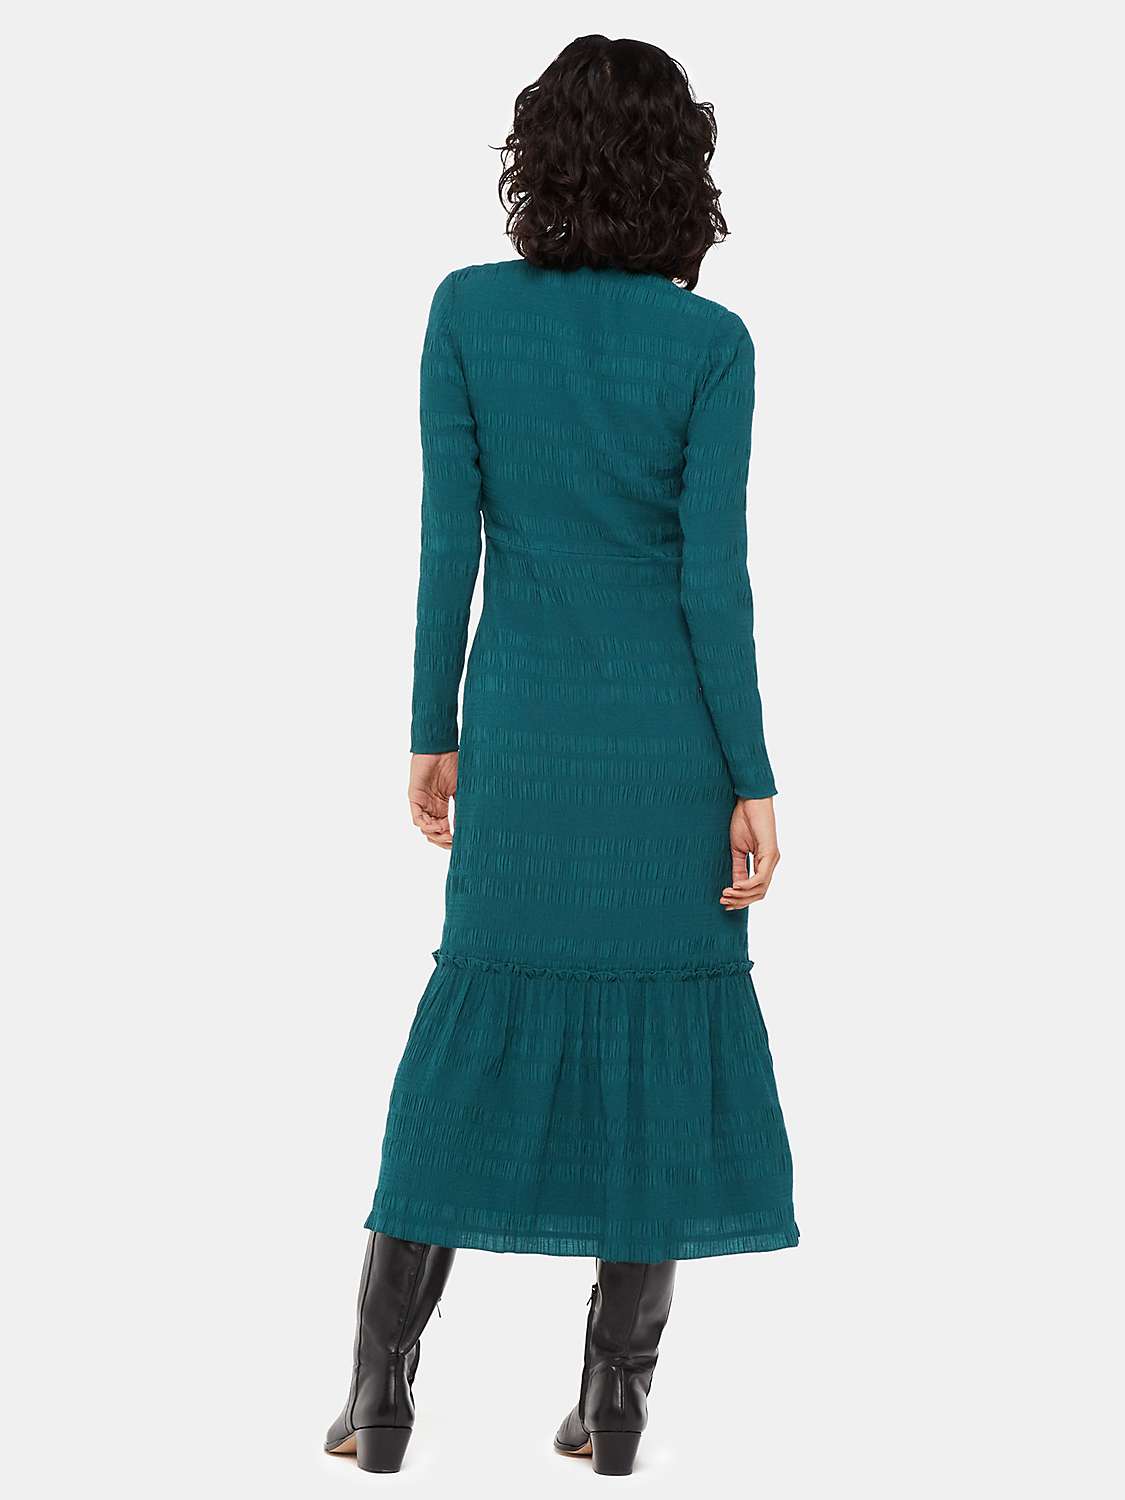 Whistles Mila Textured Midi Dress, Green at John Lewis & Partners